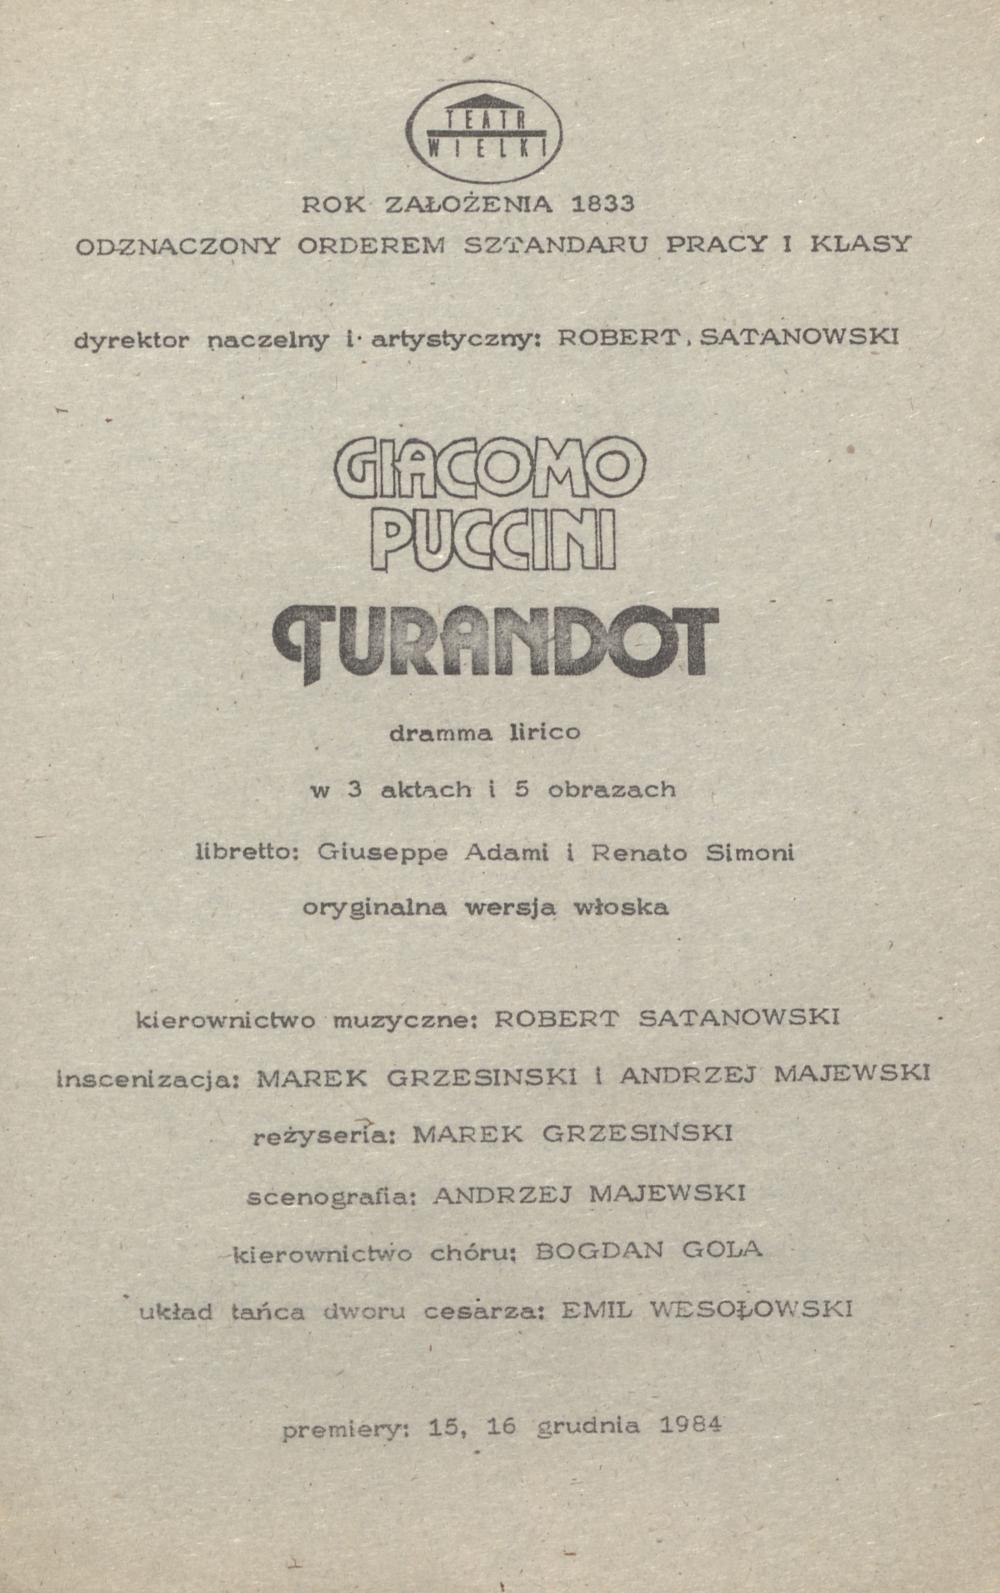 Wkładka obsadowa „Turandot” Giacomo Puccini 28-03-1985